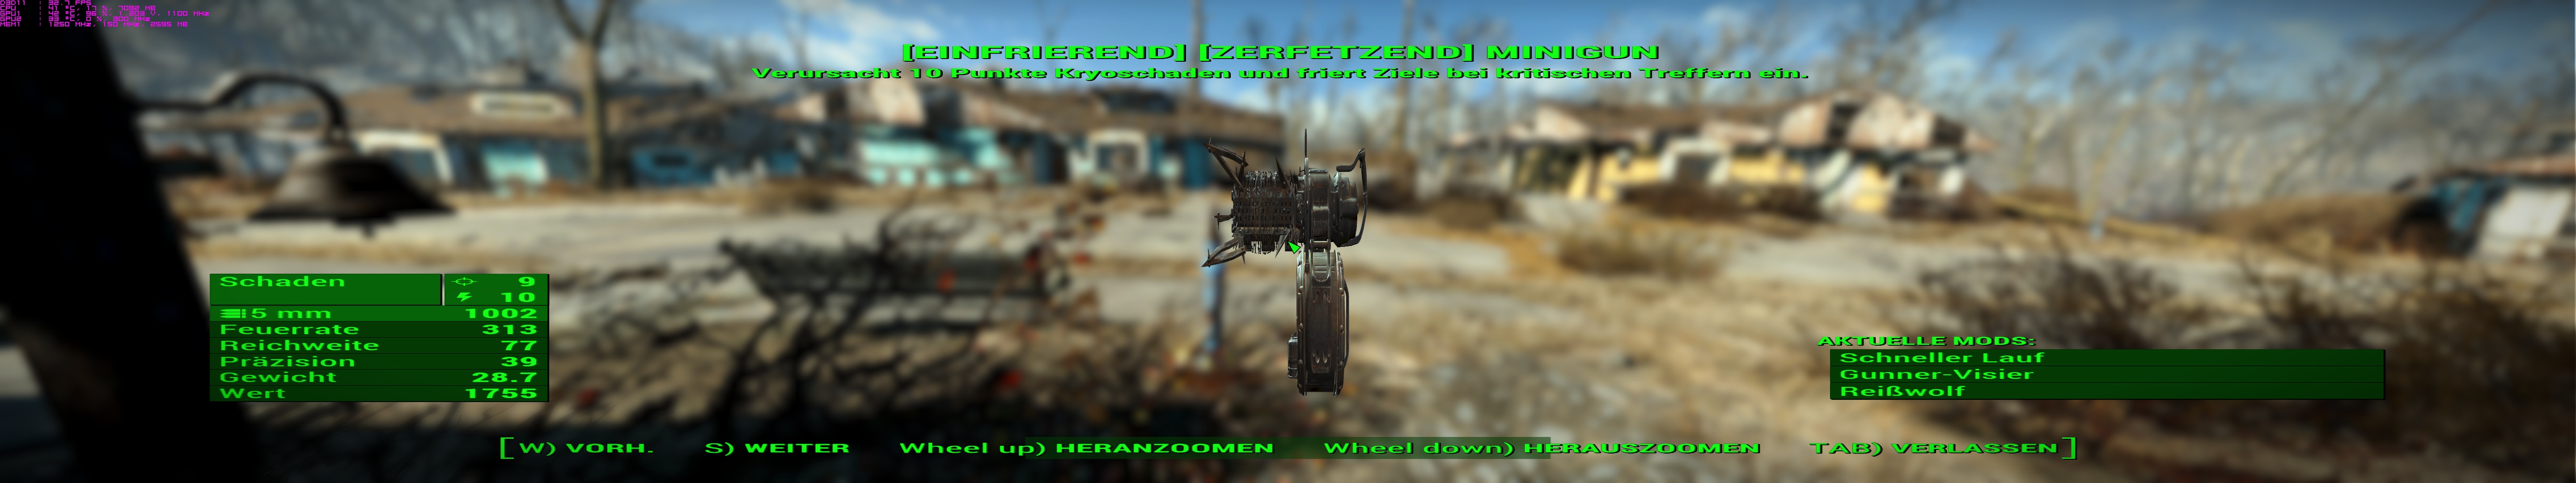 Fallout4_2015_11_15_16_50_30_434.jpg